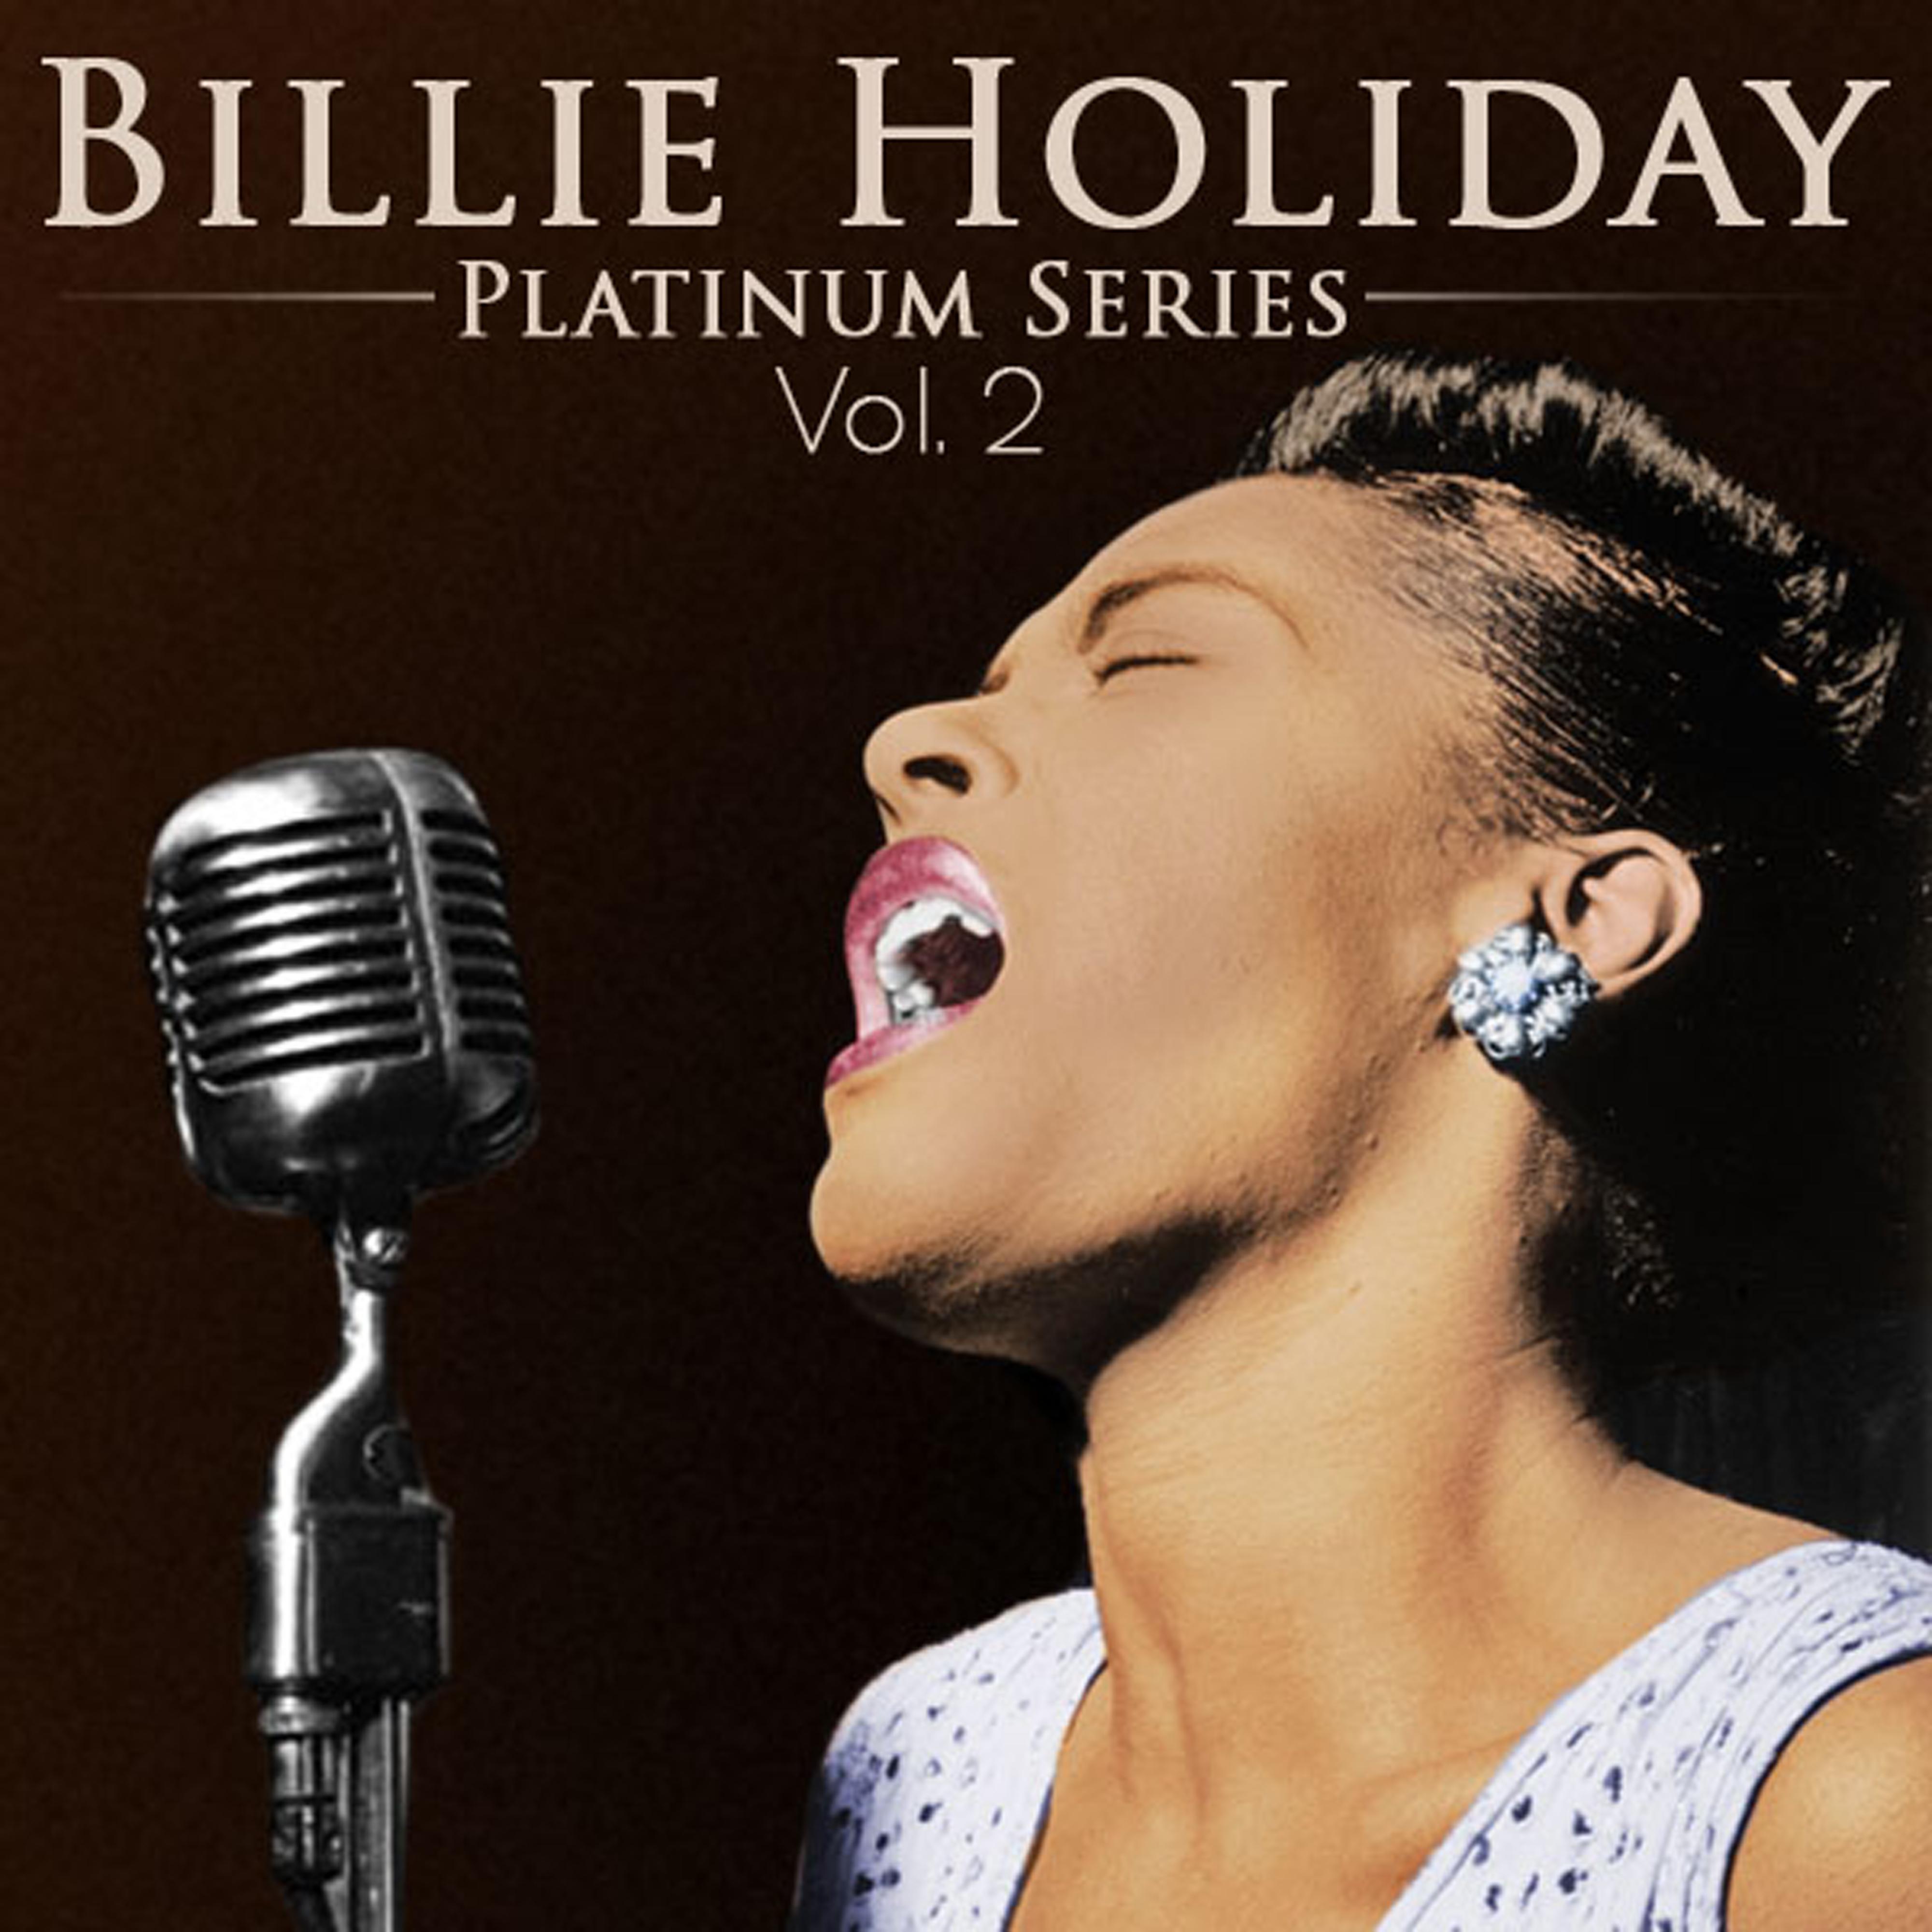 Billie Holiday - Platinum Series, Vol. 2 (Remastered)